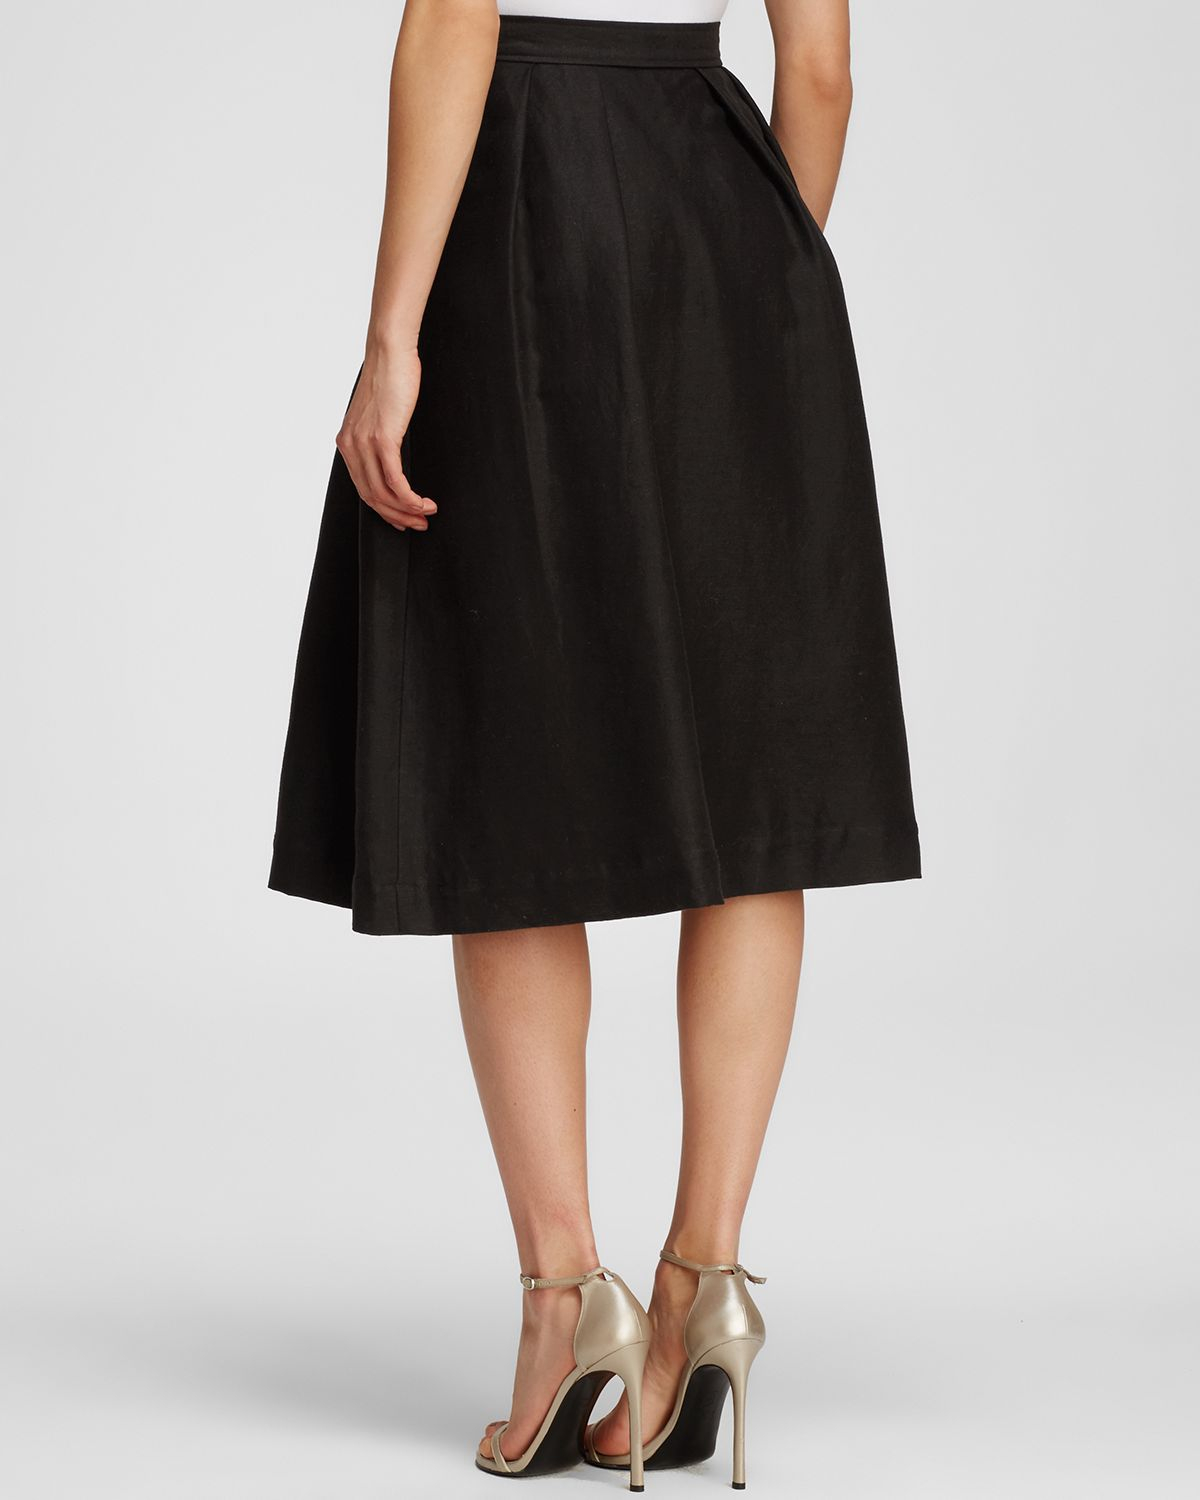 MILLY Linen Button Down Midi Skirt in Black - Lyst